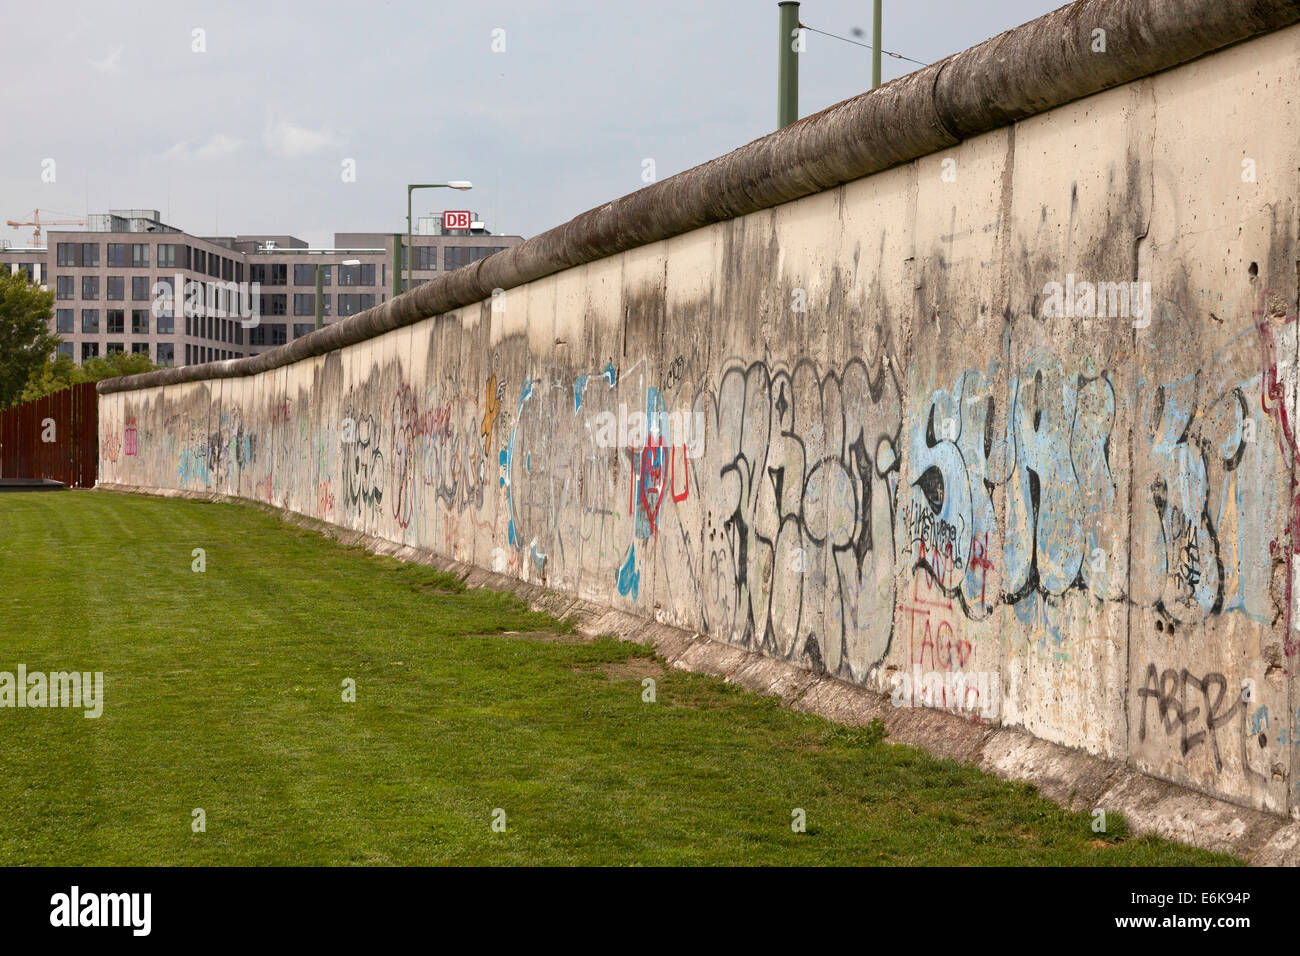 edenkstätte Berliner Mauer or Berlin Wall Memorial in Berlin, Germany, Europe Stock Photo